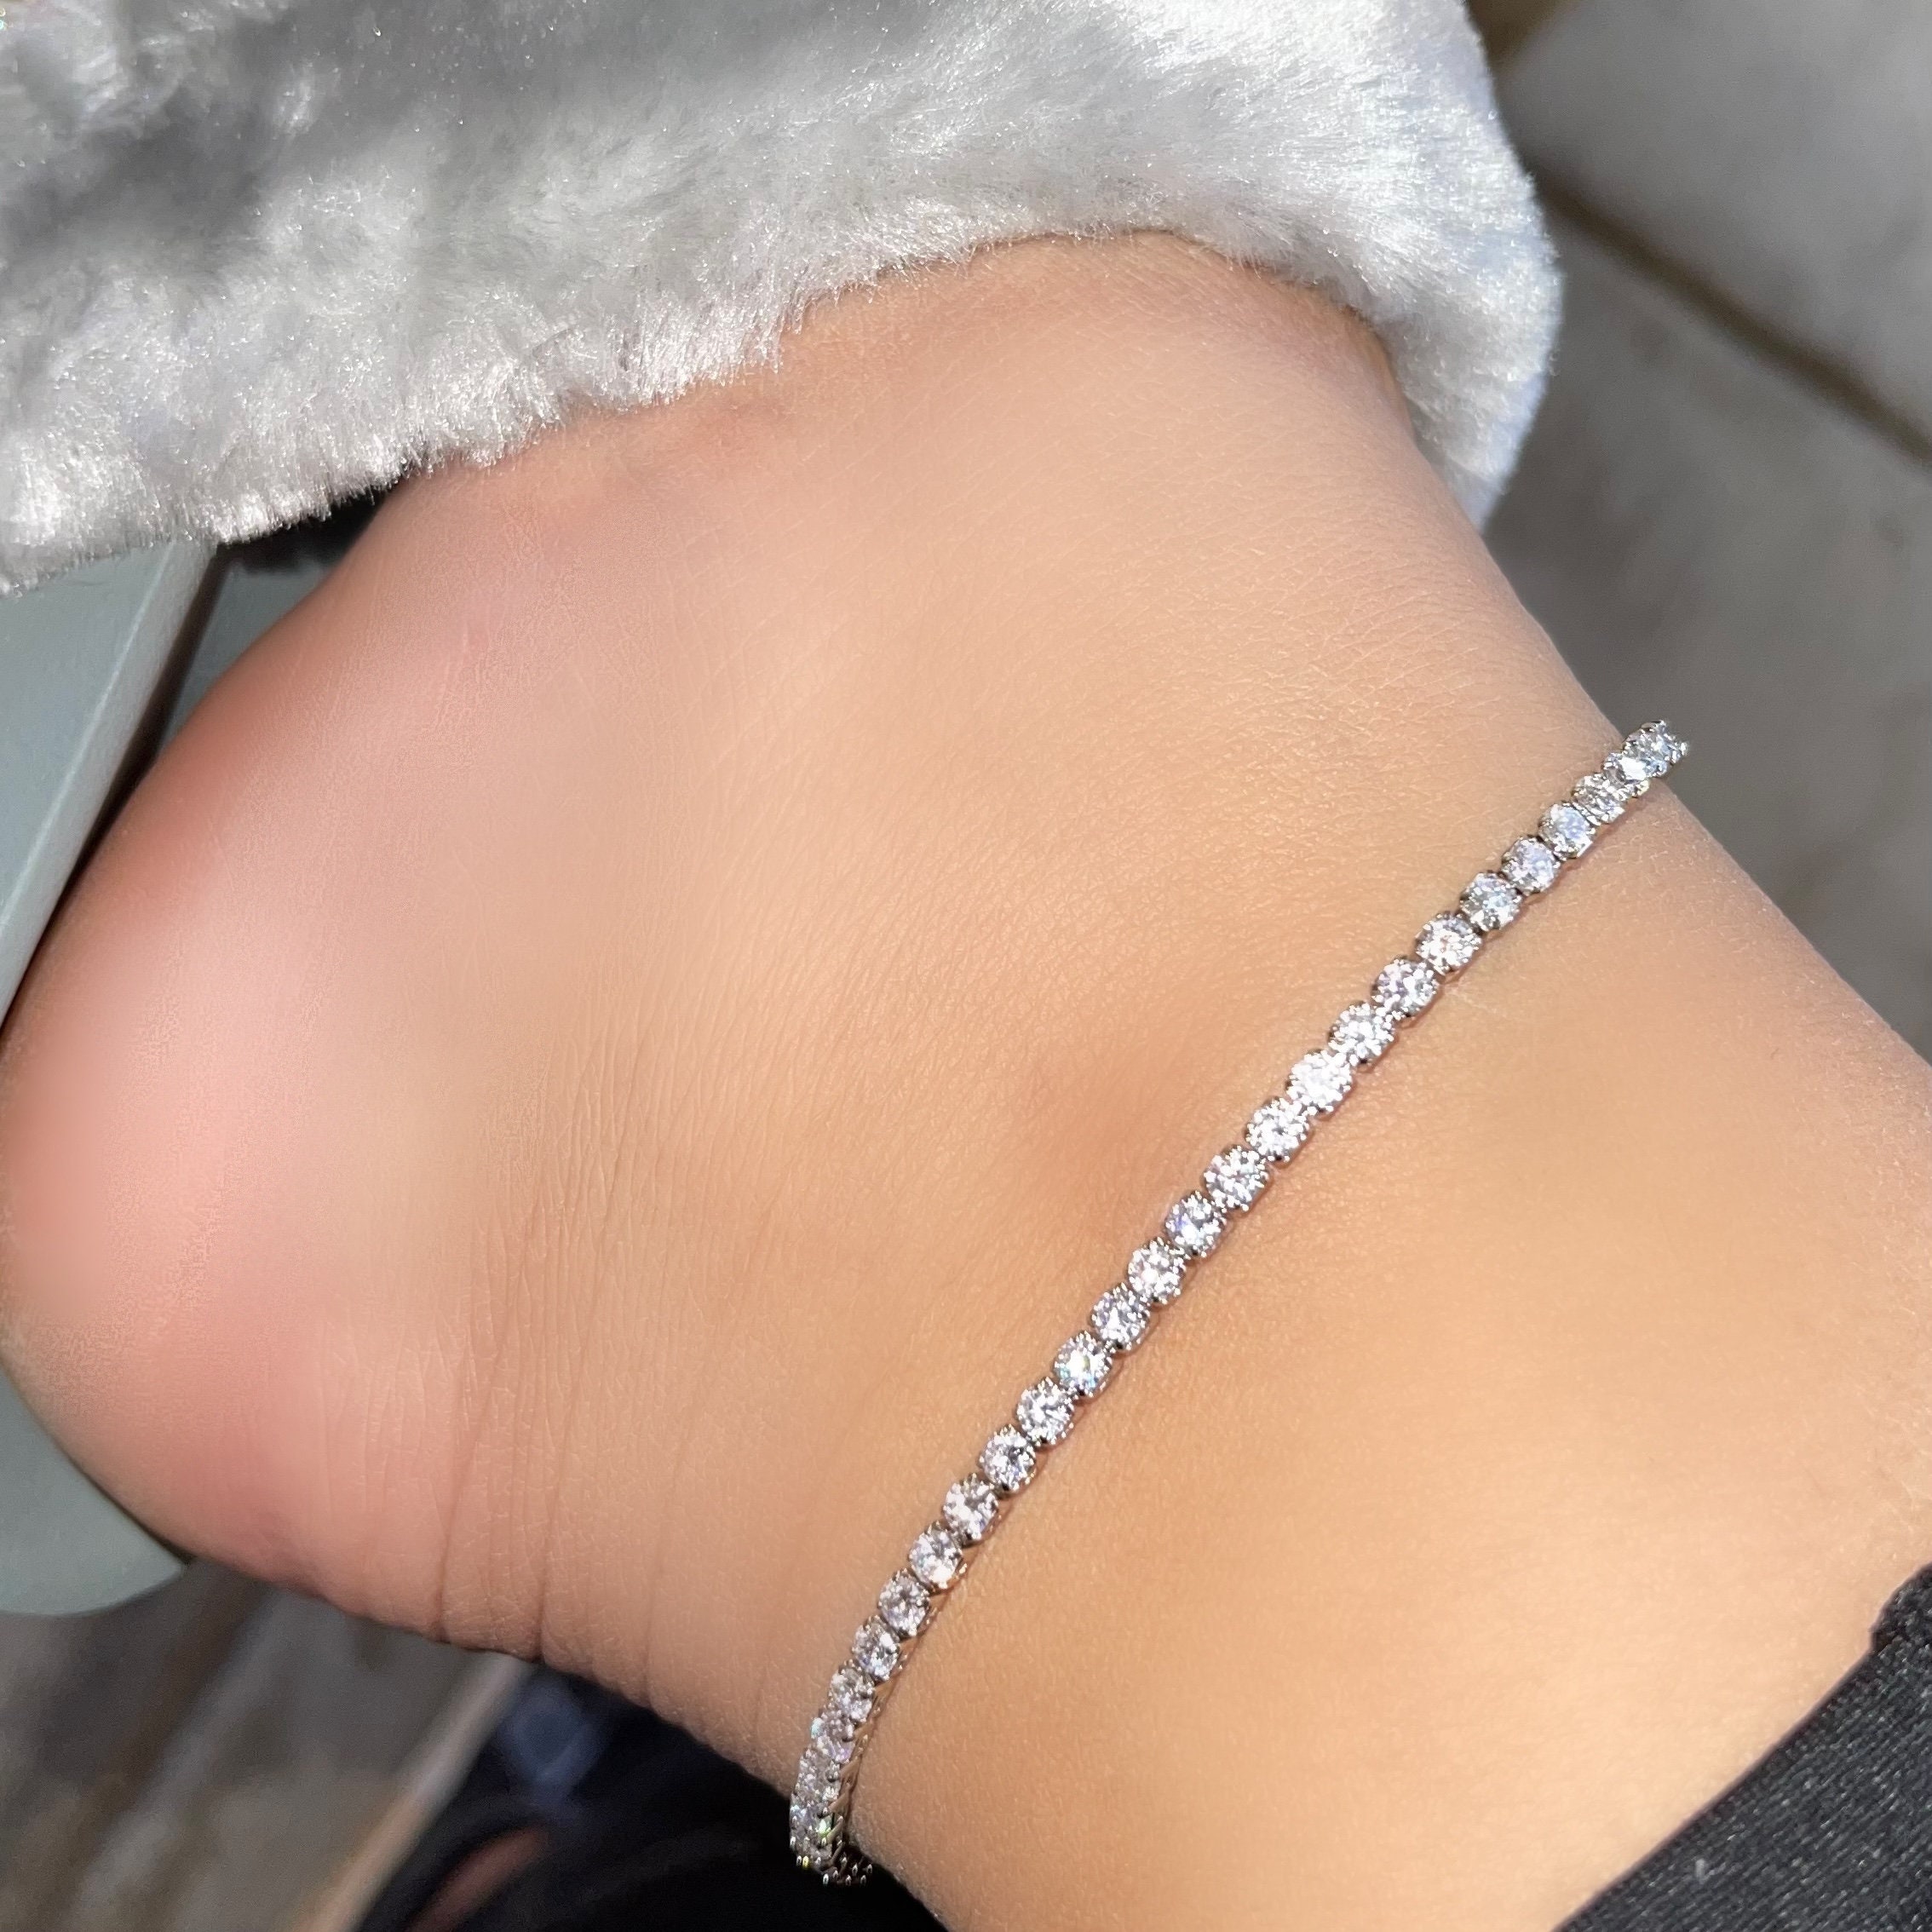 Women Ankle Bracelet Silver Anklet Foot Jewelry Girl's Beach Chain Diamond  2 AU for sale online | eBay